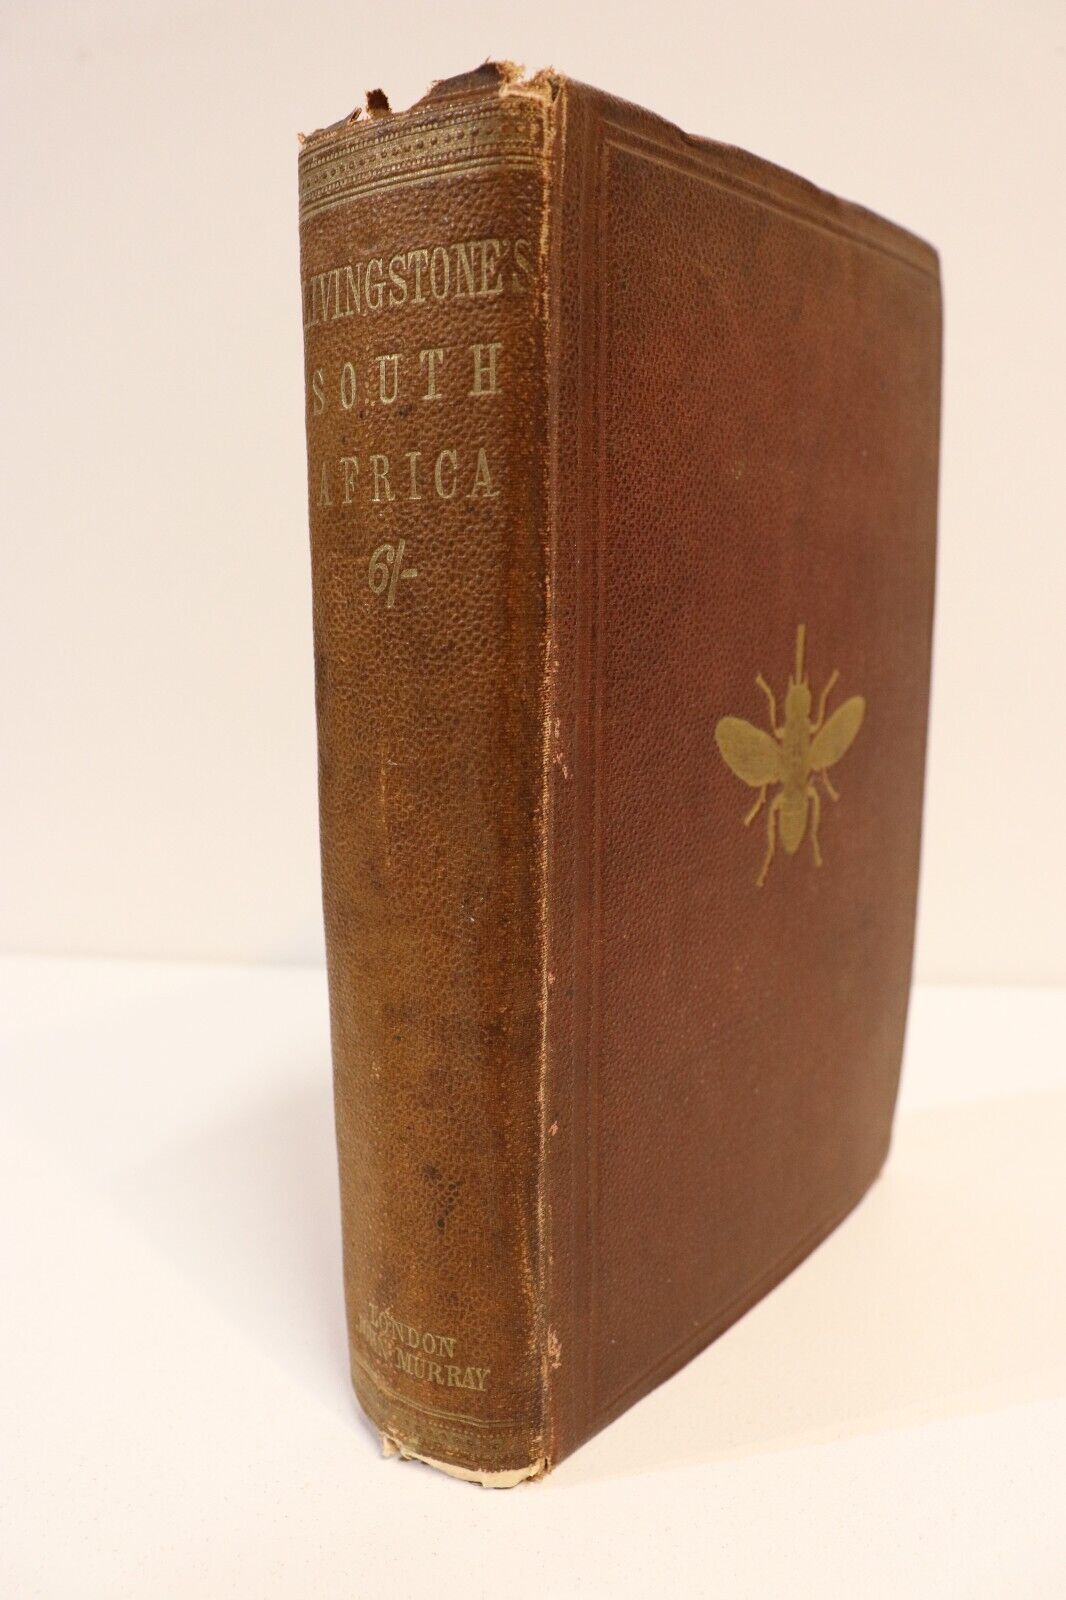 1861 Livingstone In South Africa - David Livingstone Antique Exploration Book